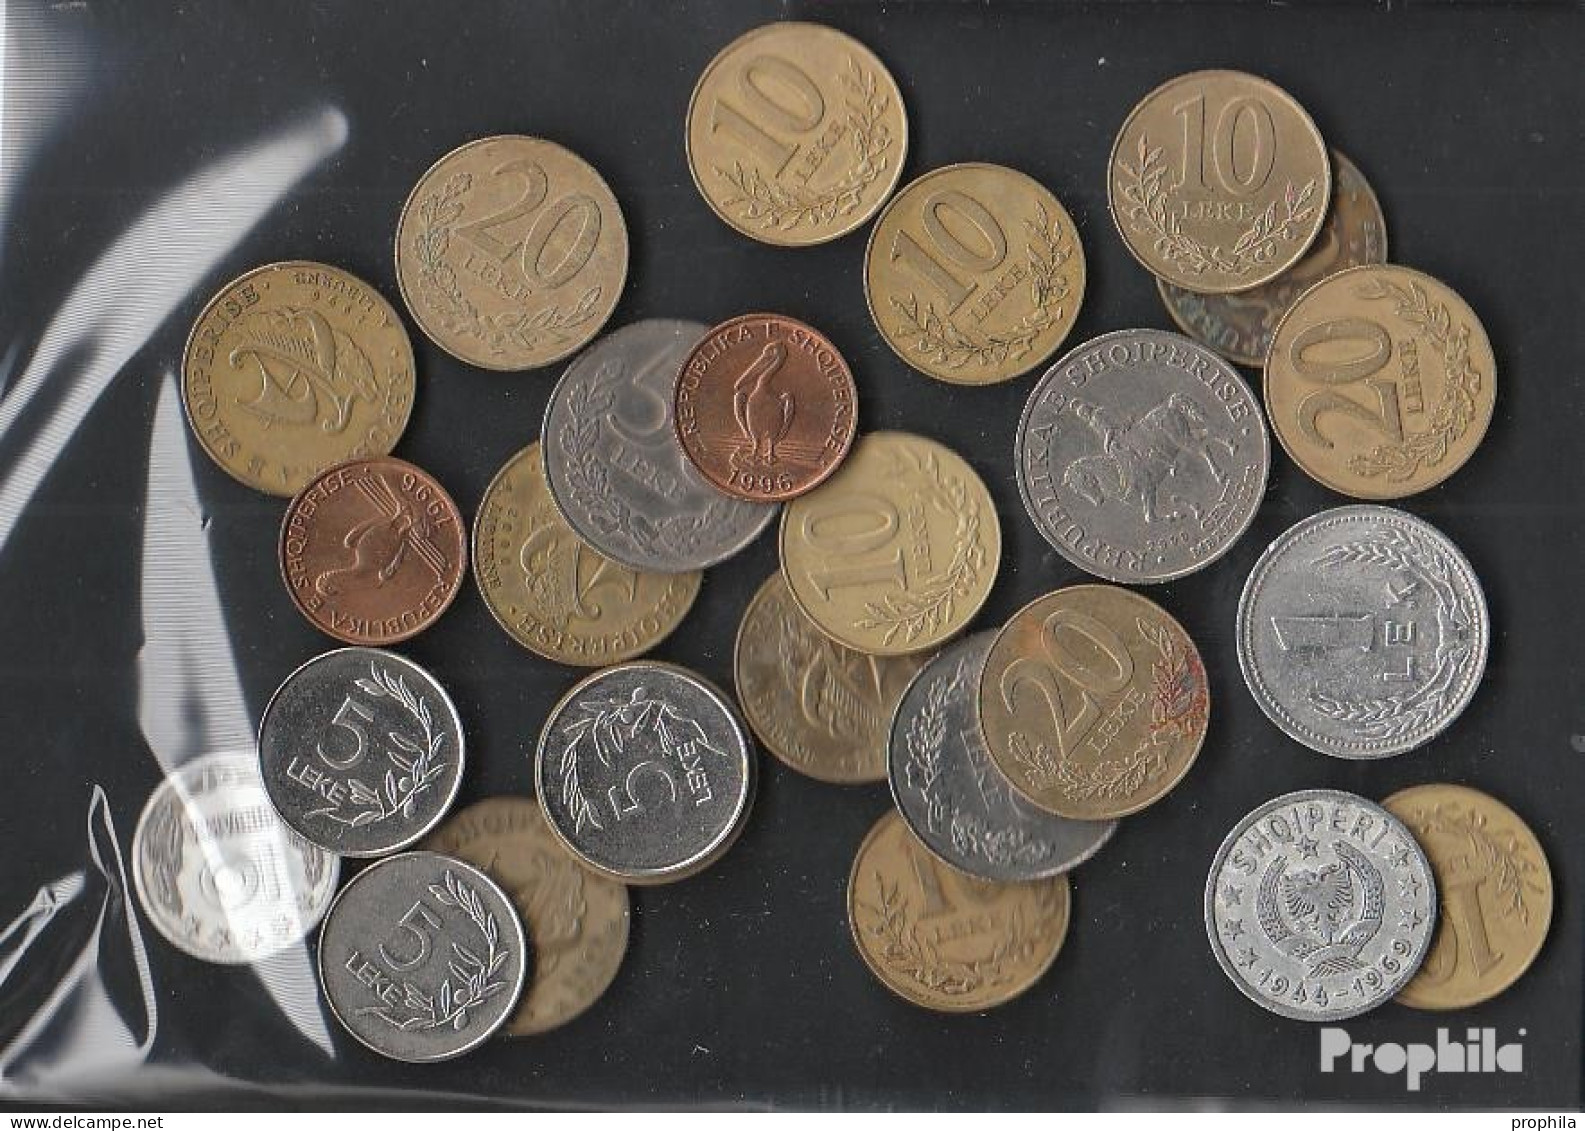 Albanien 100 Gramm Münzkiloware - Lots & Kiloware - Coins